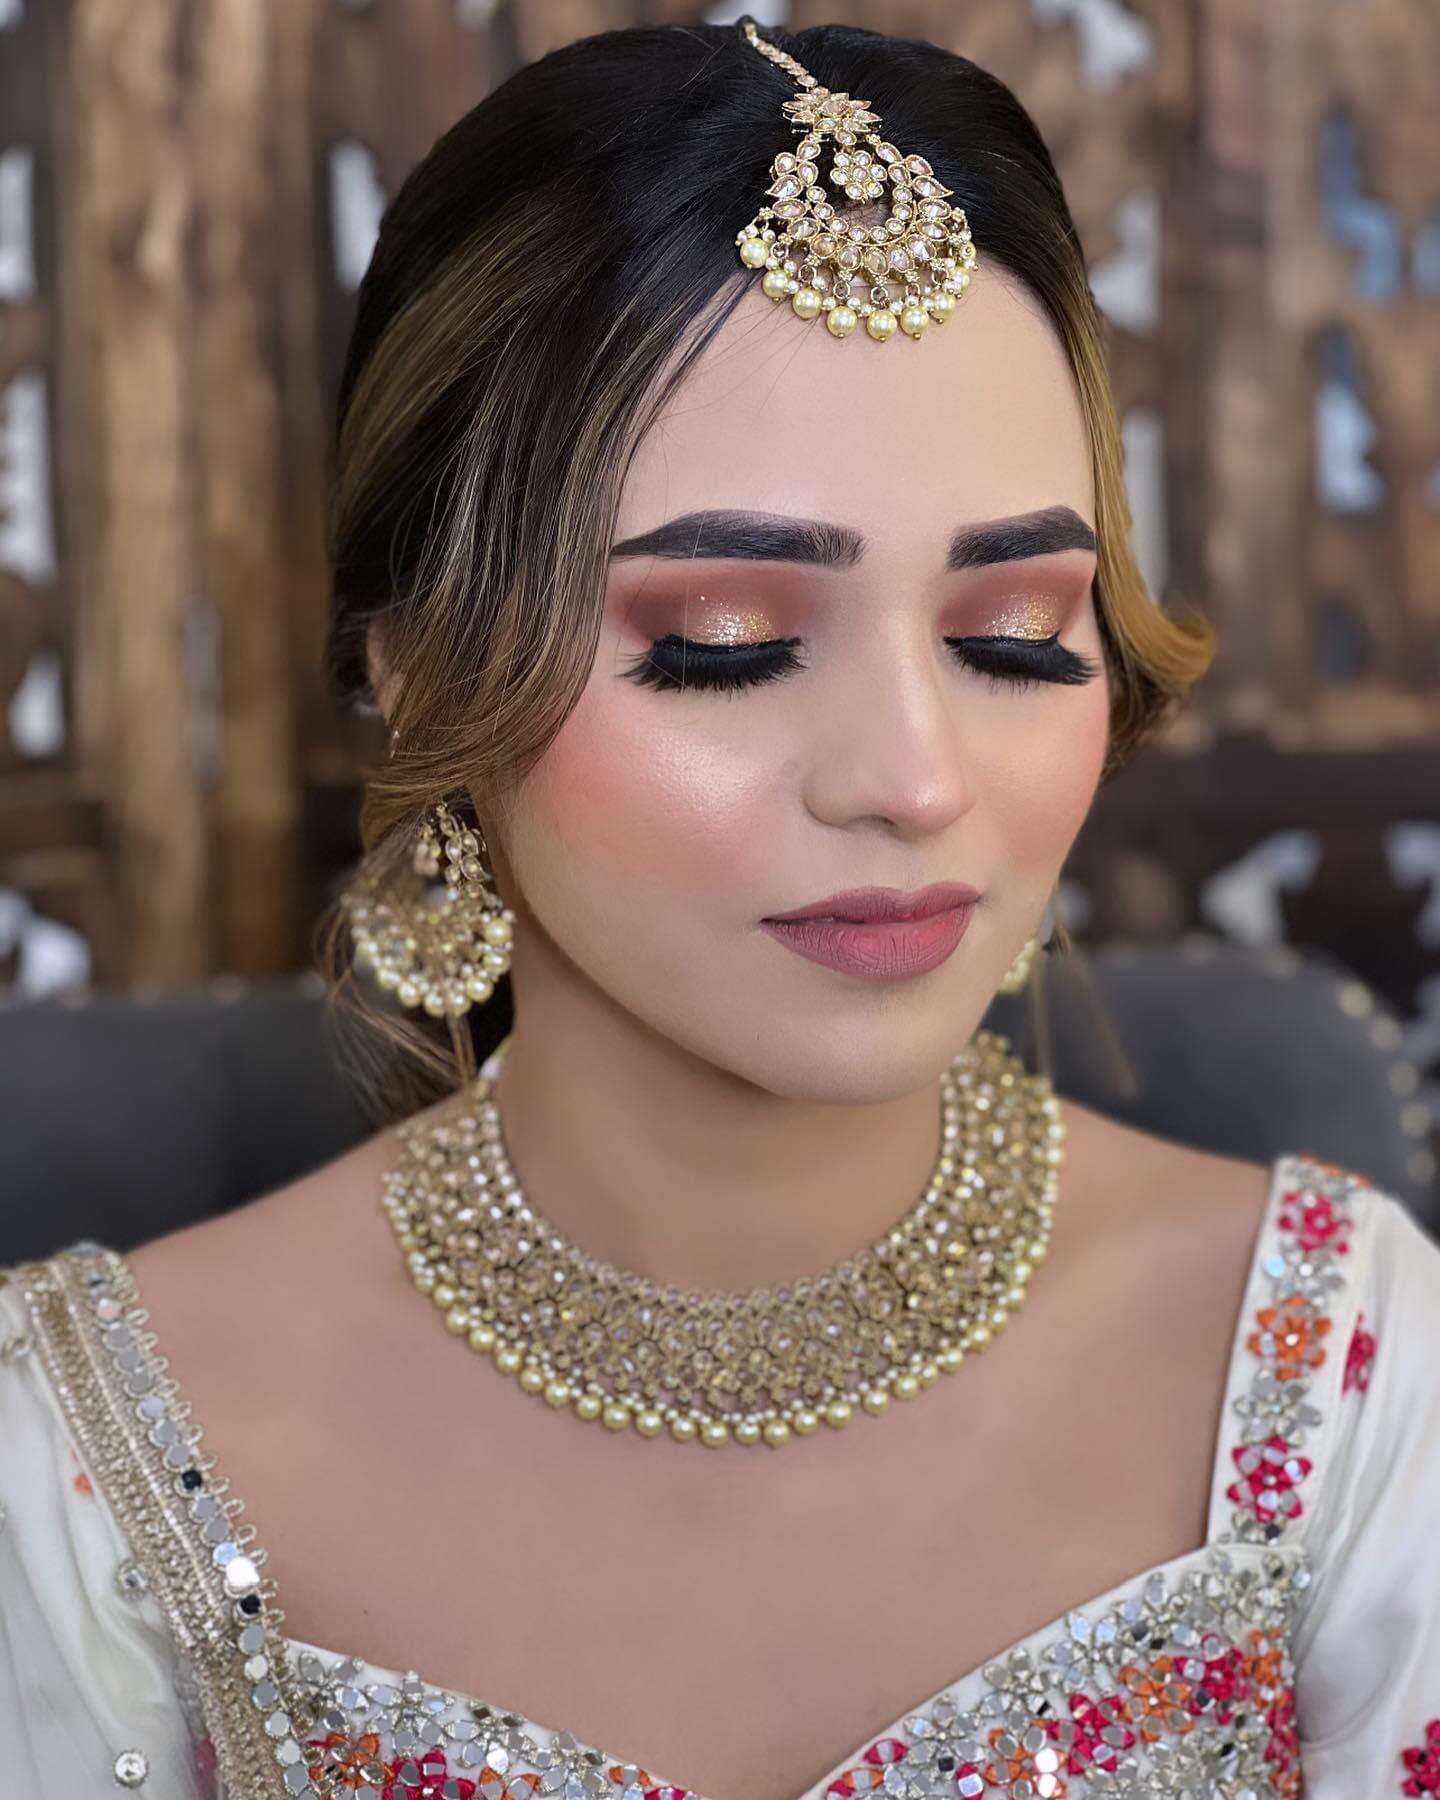 deepika-verma-makeup-artist-chandigarh